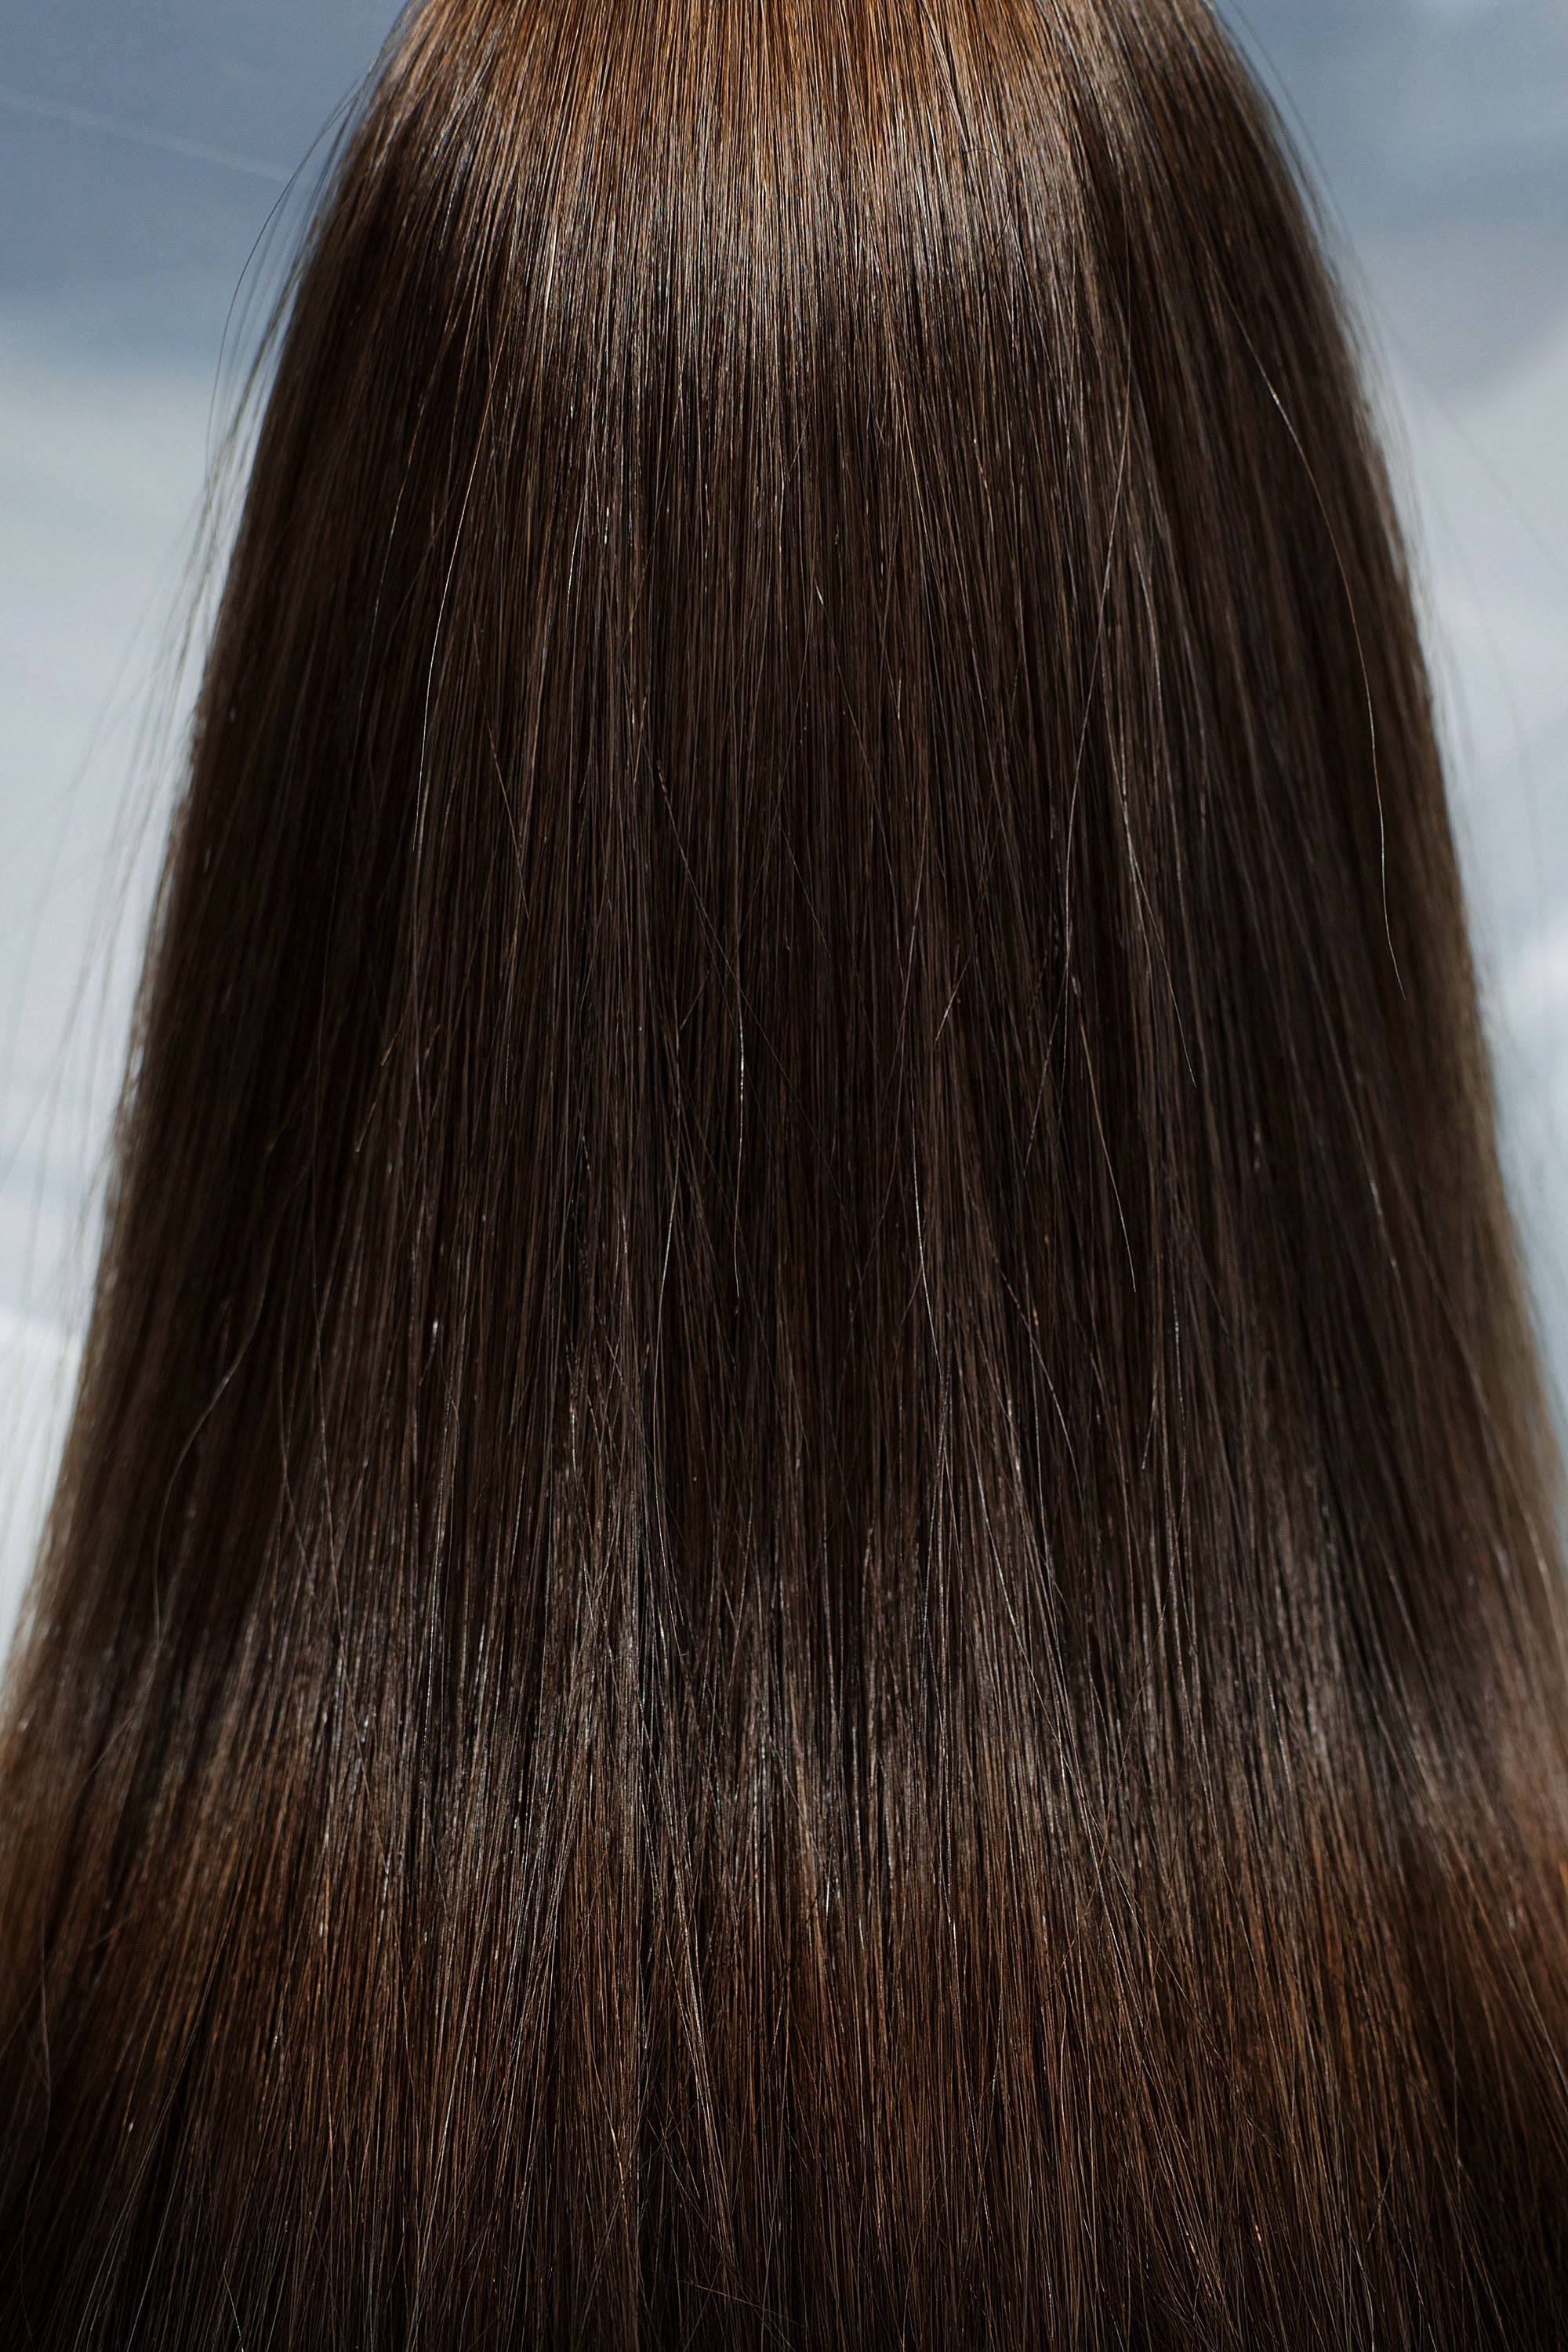 Behair professional Keratin Tip "Premium" 20" (50cm) Natural Straight Light Brown #4 - 25g (1g each pcs) hair extensions